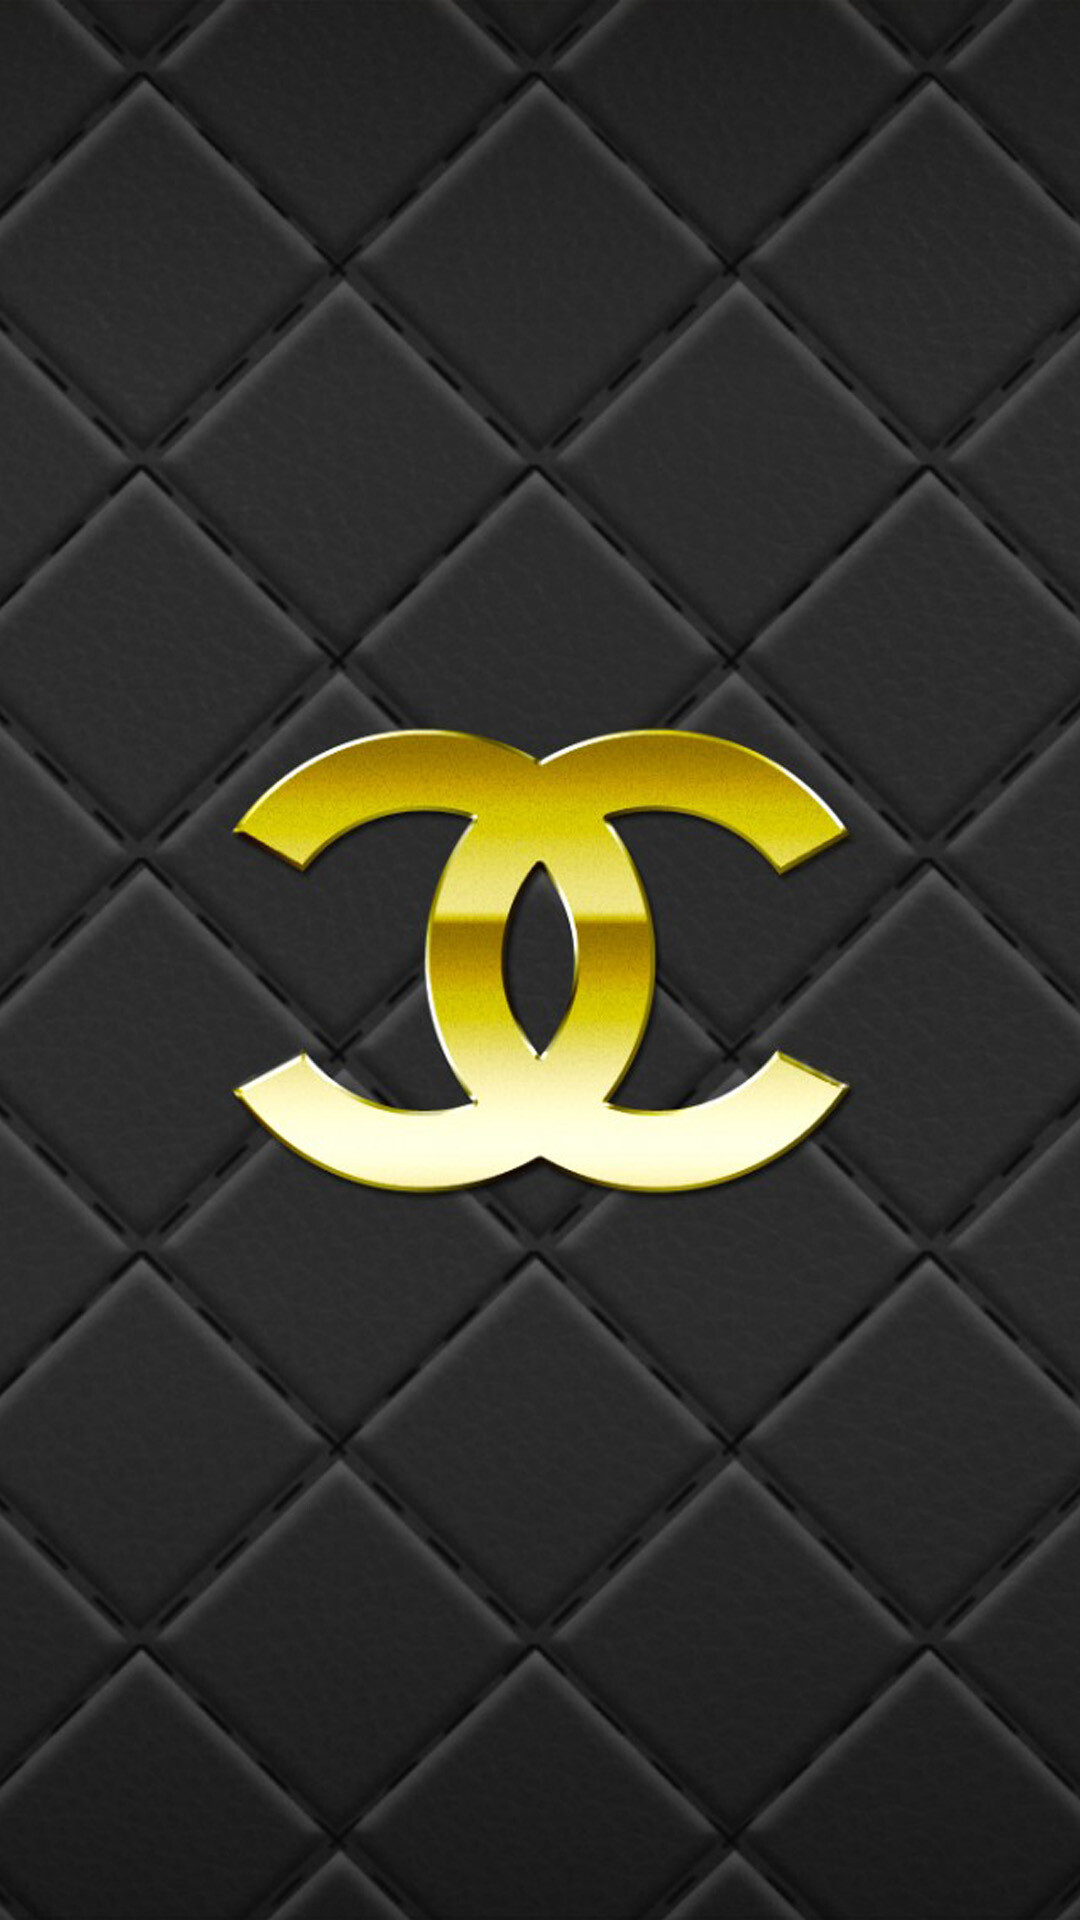 Chanel: The timeless social luxury brand. 1080x1920 Full HD Wallpaper.